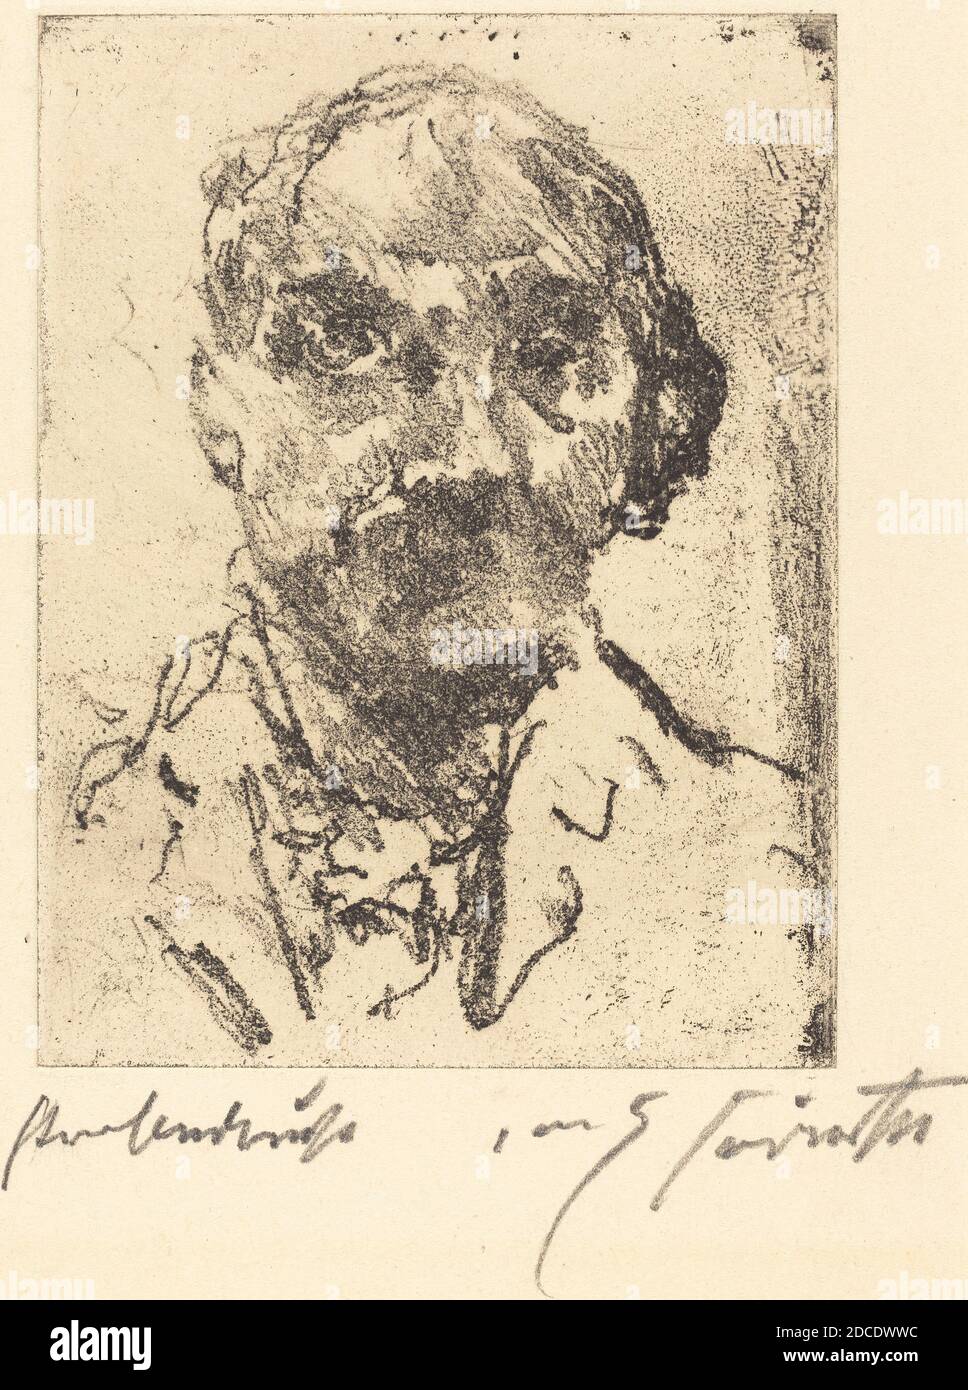 Lovis Corinth, (artist), German, 1858 - 1925, Selbstbildnis (Self-Portrait), 1921/1922, softground etching on wove paper, plate: 12 x 9 cm (4 3/4 x 3 9/16 in.), sheet: 26.5 x 19.8 cm (10 7/16 x 7 13/16 in Stock Photo